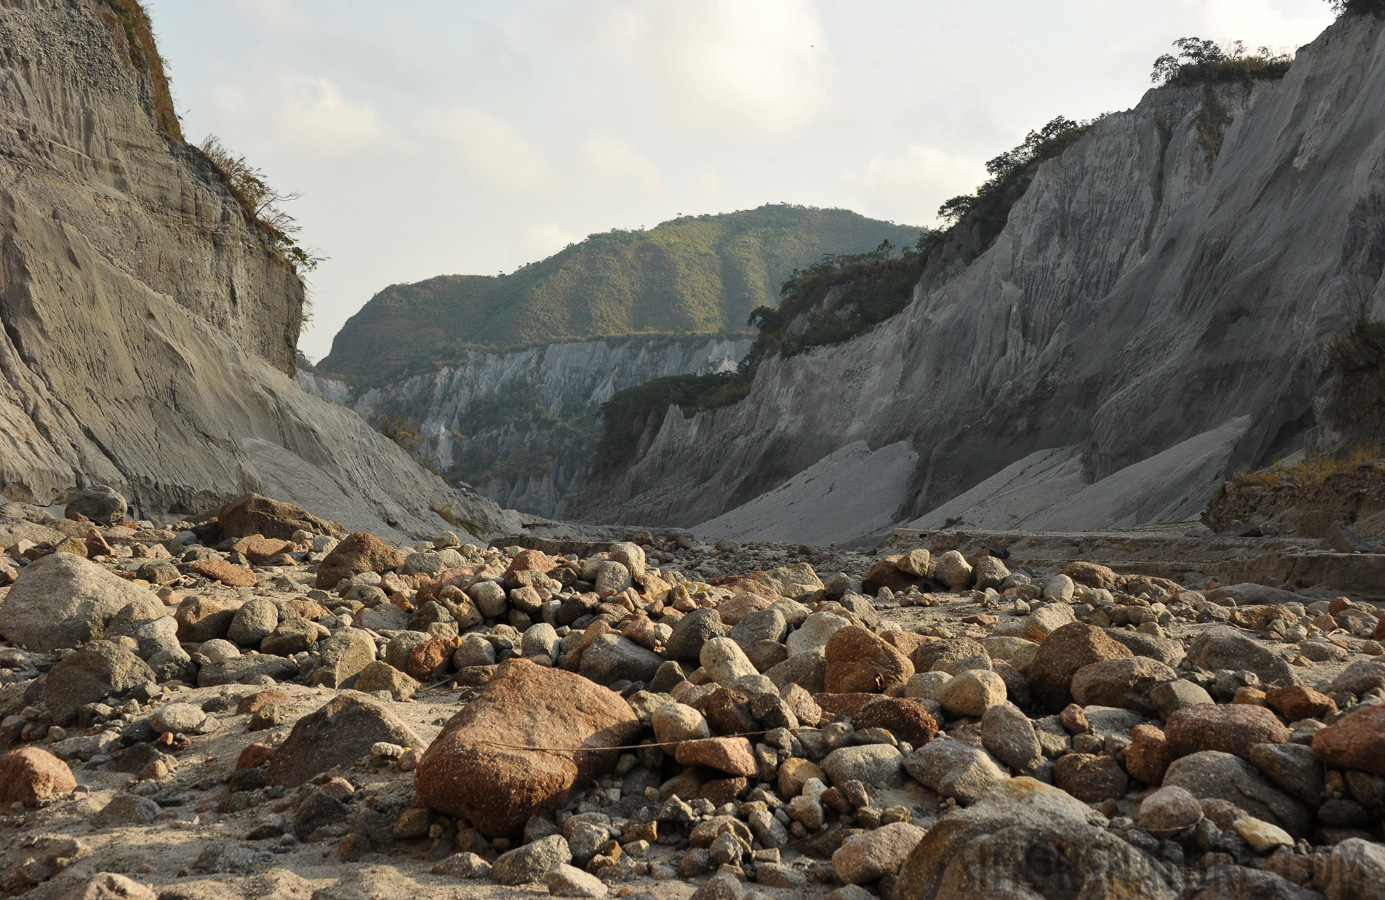 Mount Pinatubo [58 mm, 1/640 sec at f / 13, ISO 1600]